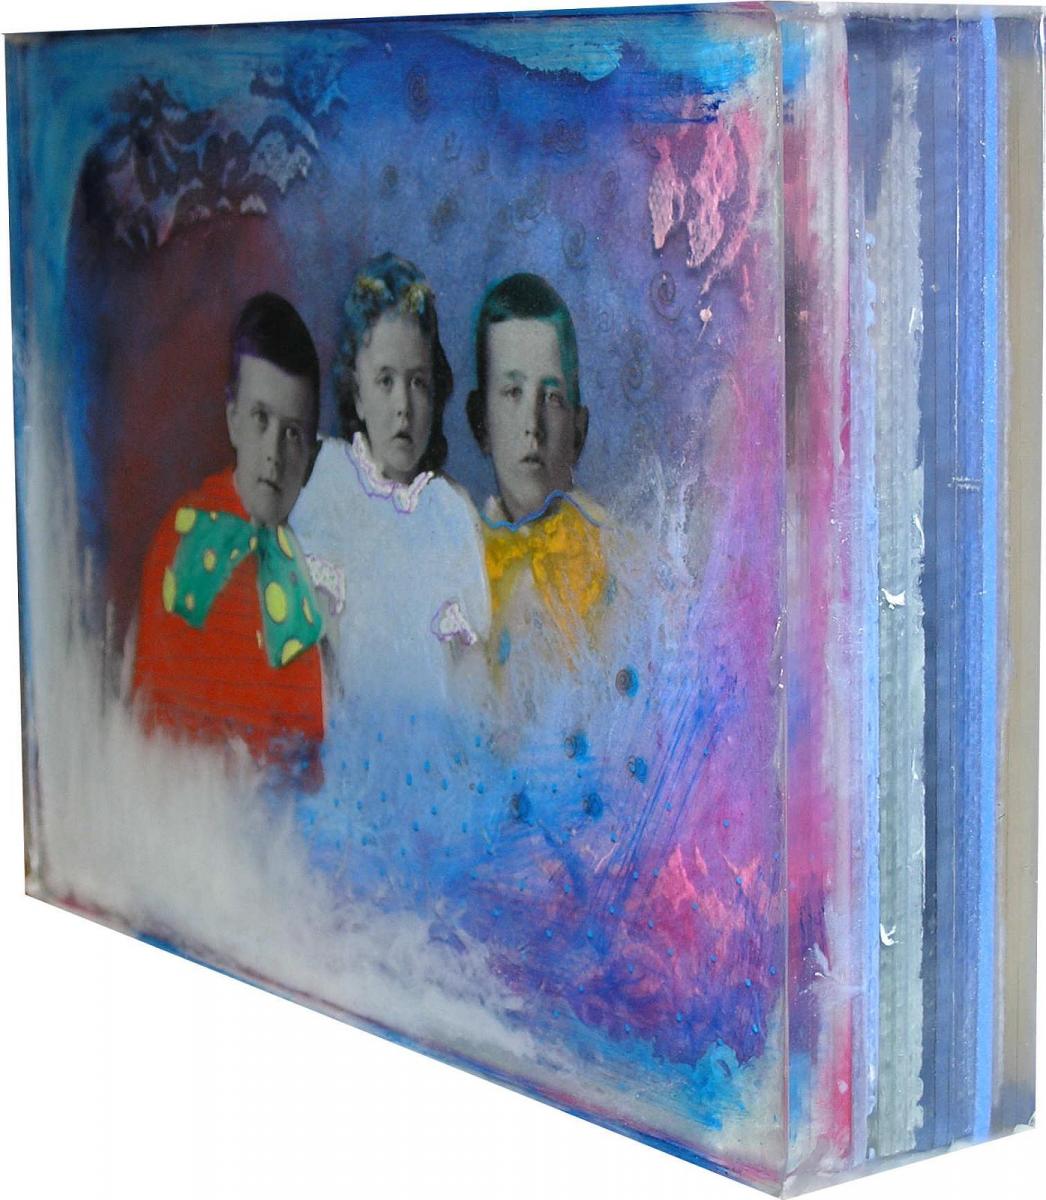 resin box by Matt Kane - “Stolen Children” - detail 1